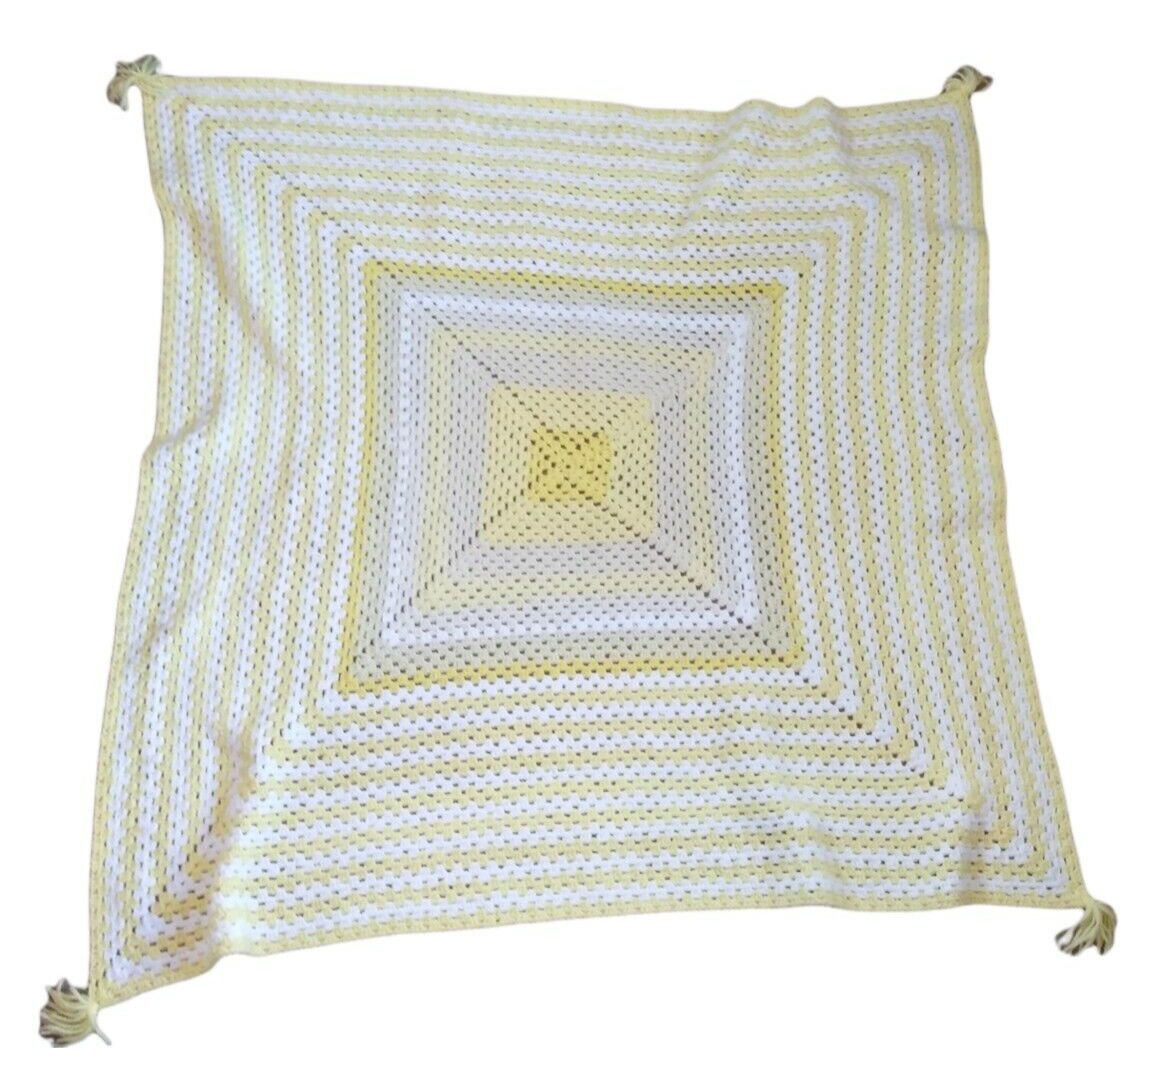 Hand Knit Crochet Afghan Lap Throw Blanket Vintage Yellow White Tassels